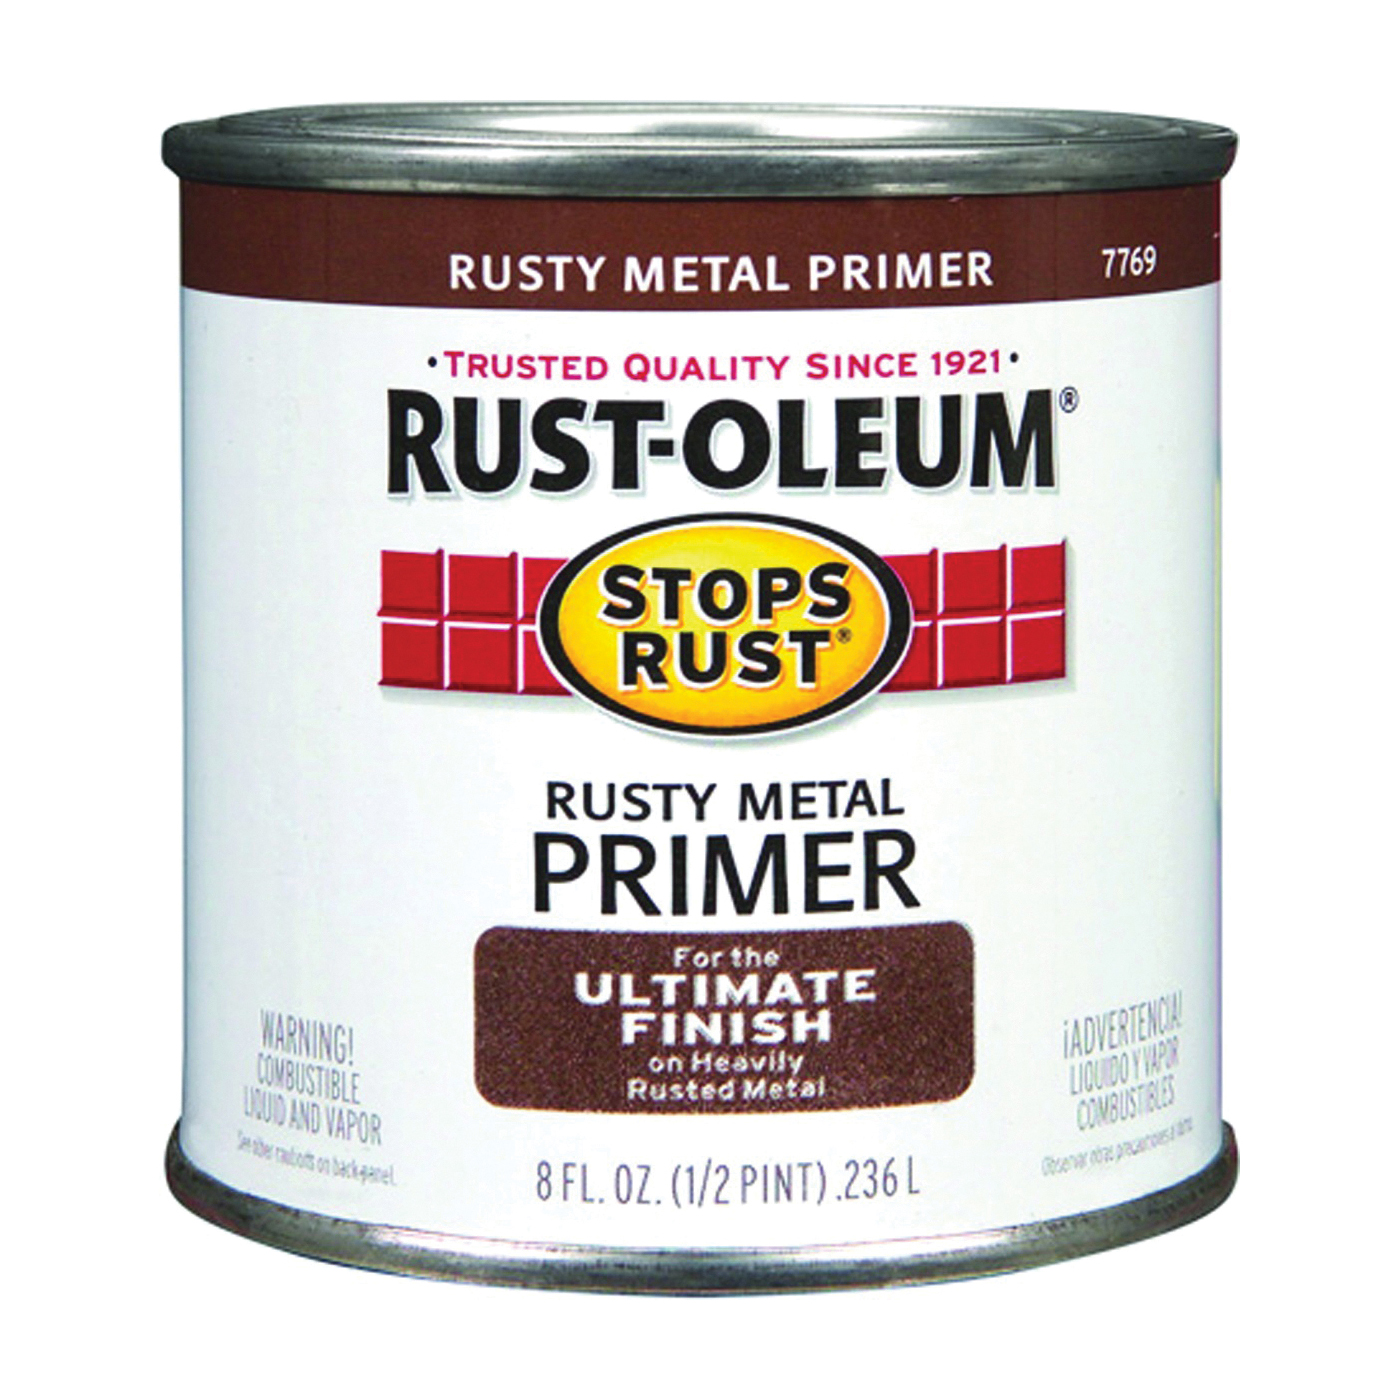 RUST-OLEUM STOPS RUST 7769730 Rusty Metal Primer, Flat, Rusty Metal Primer, 0.5 pt - 1